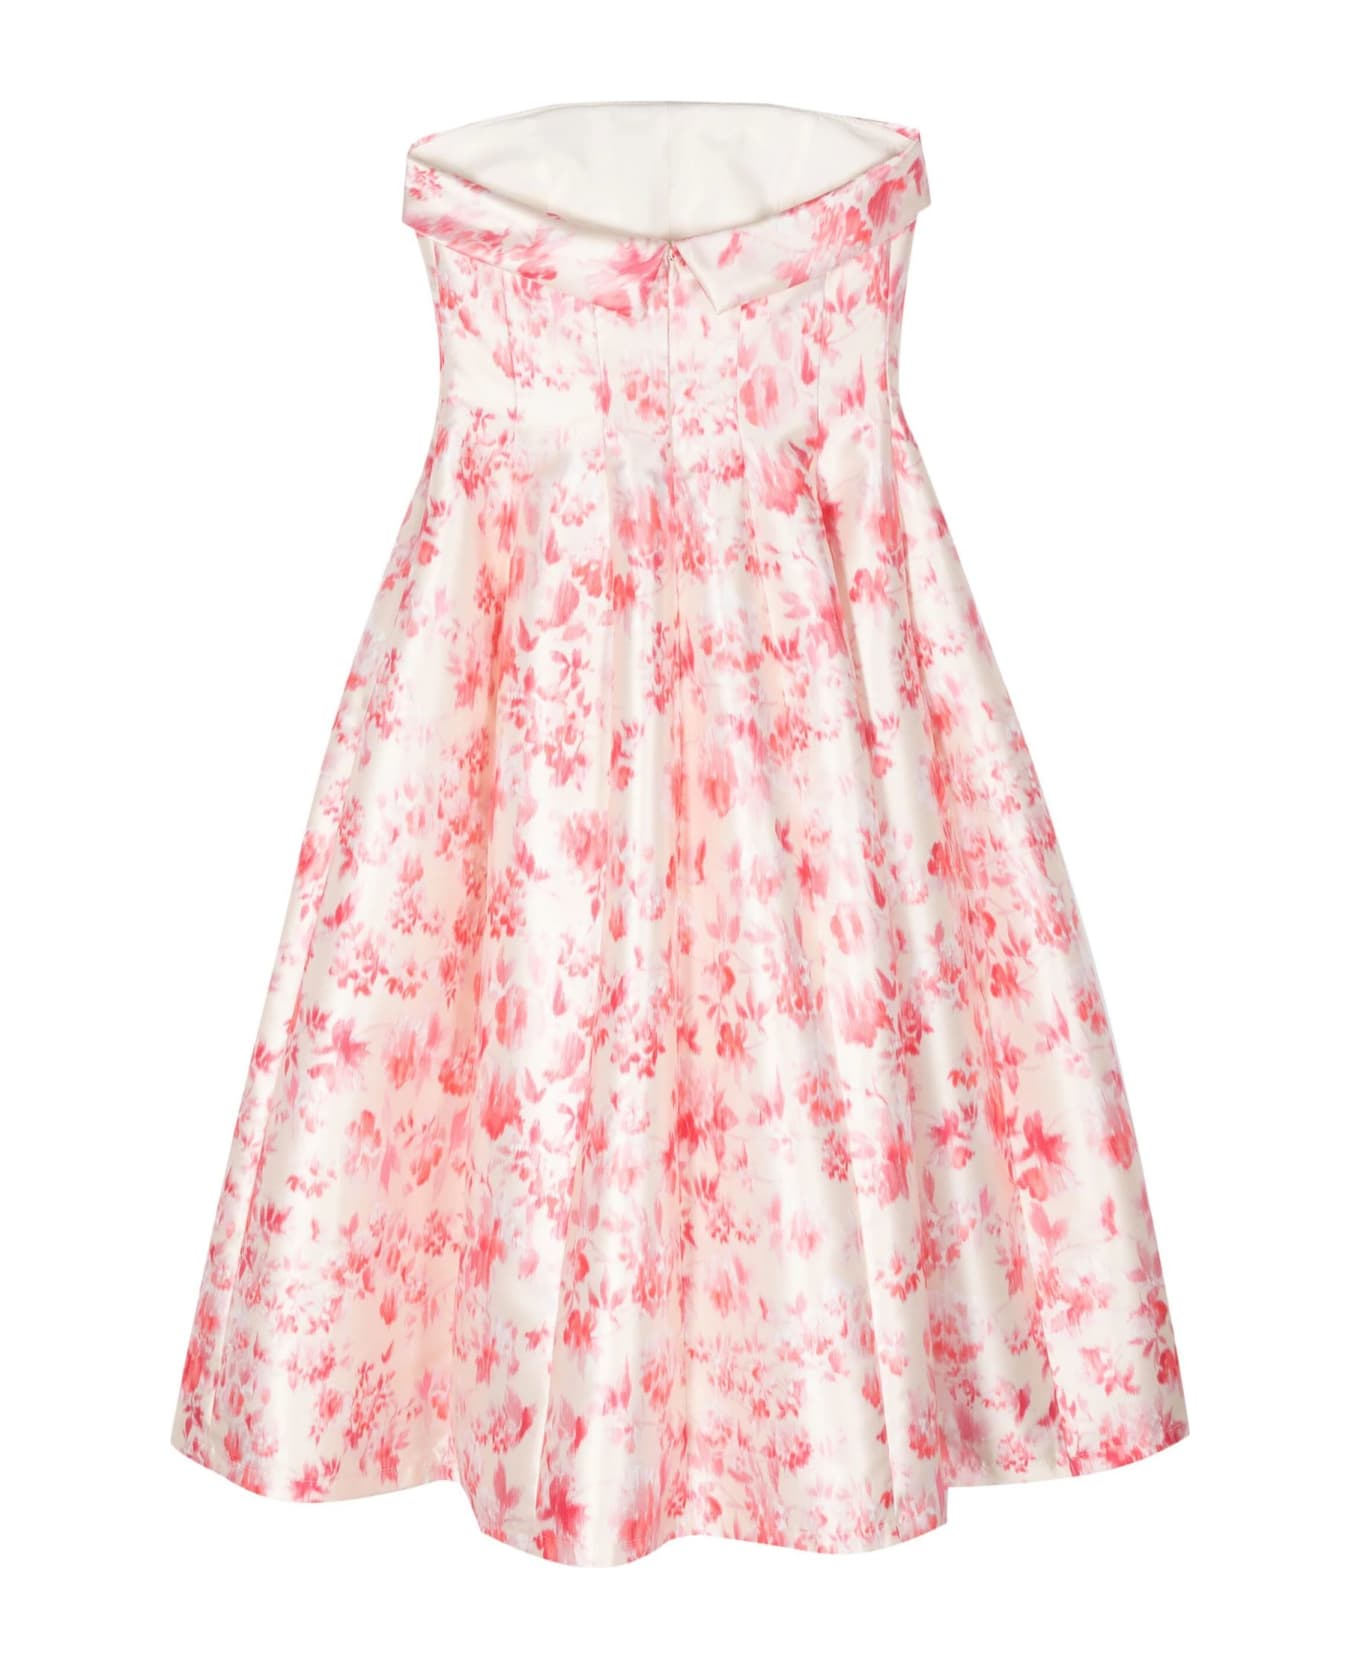 Philosophy di Lorenzo Serafini White And Pink Pleated Midi Dress - White